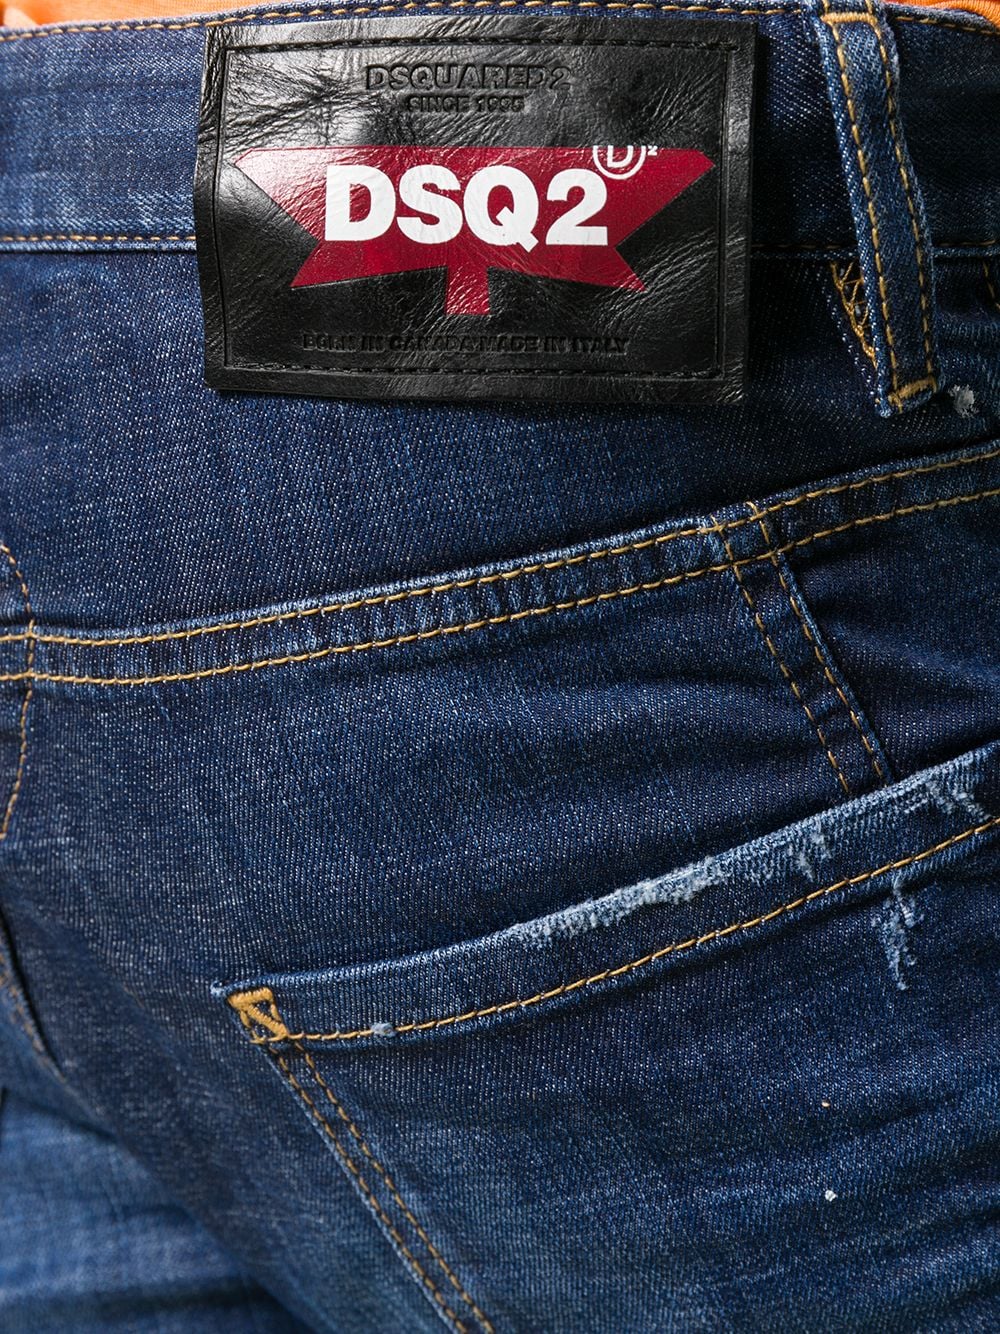 dsquared2 jeans label